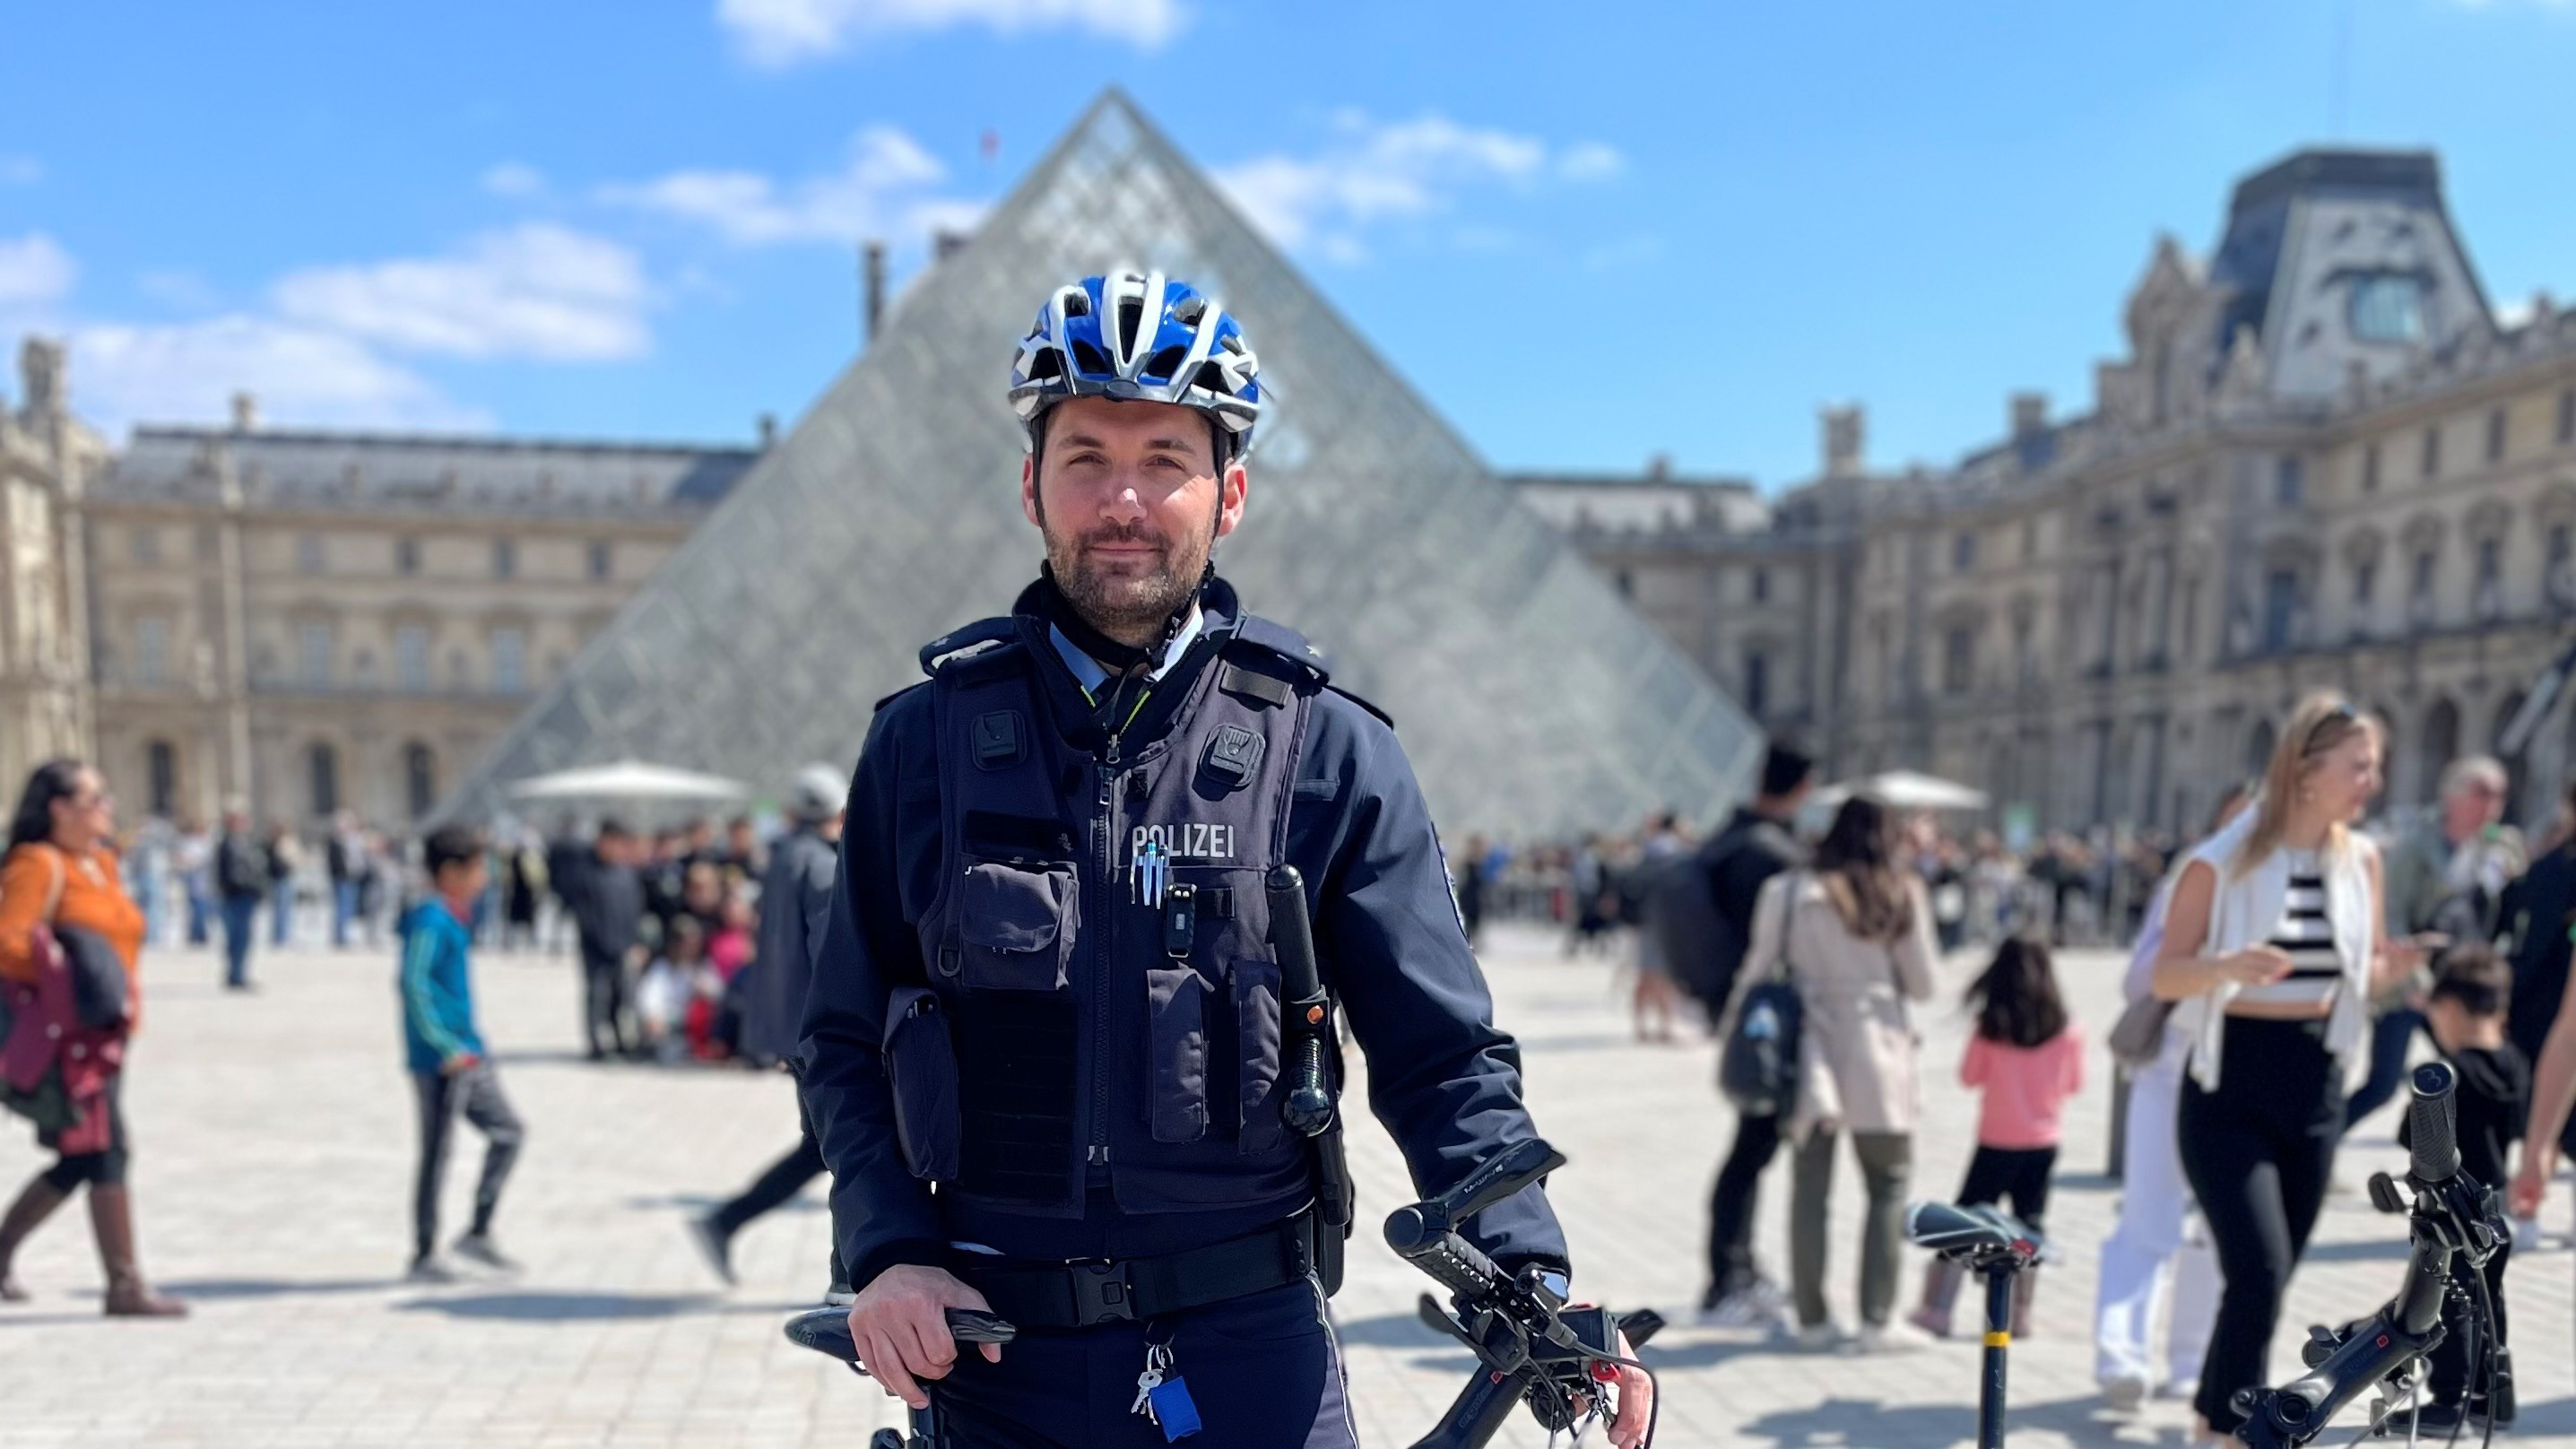 Bike patrol at the Louvre